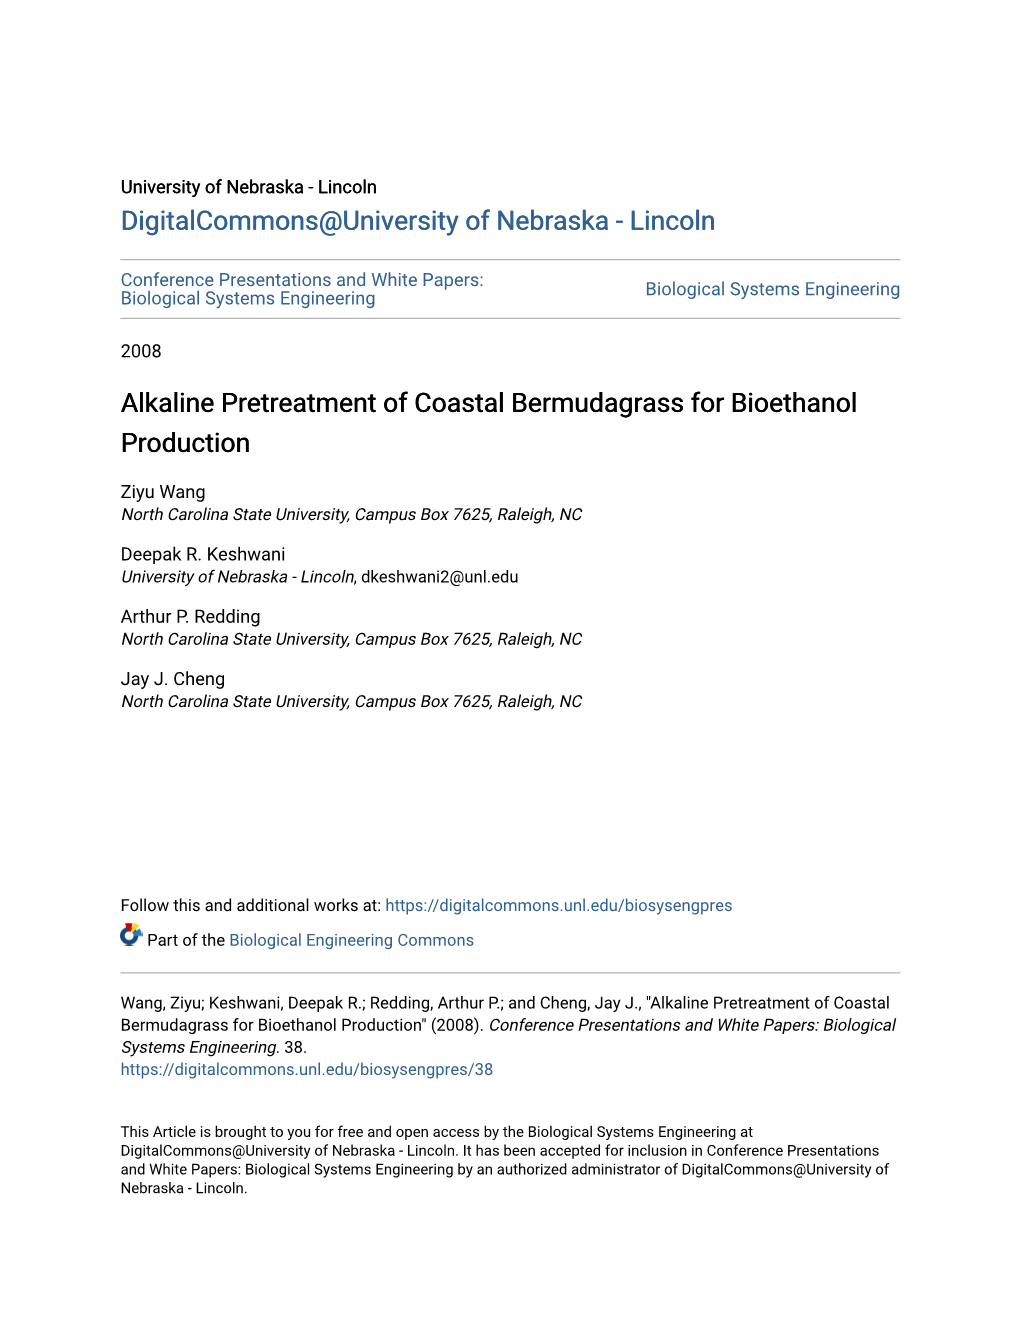 Alkaline Pretreatment of Coastal Bermudagrass for Bioethanol Production